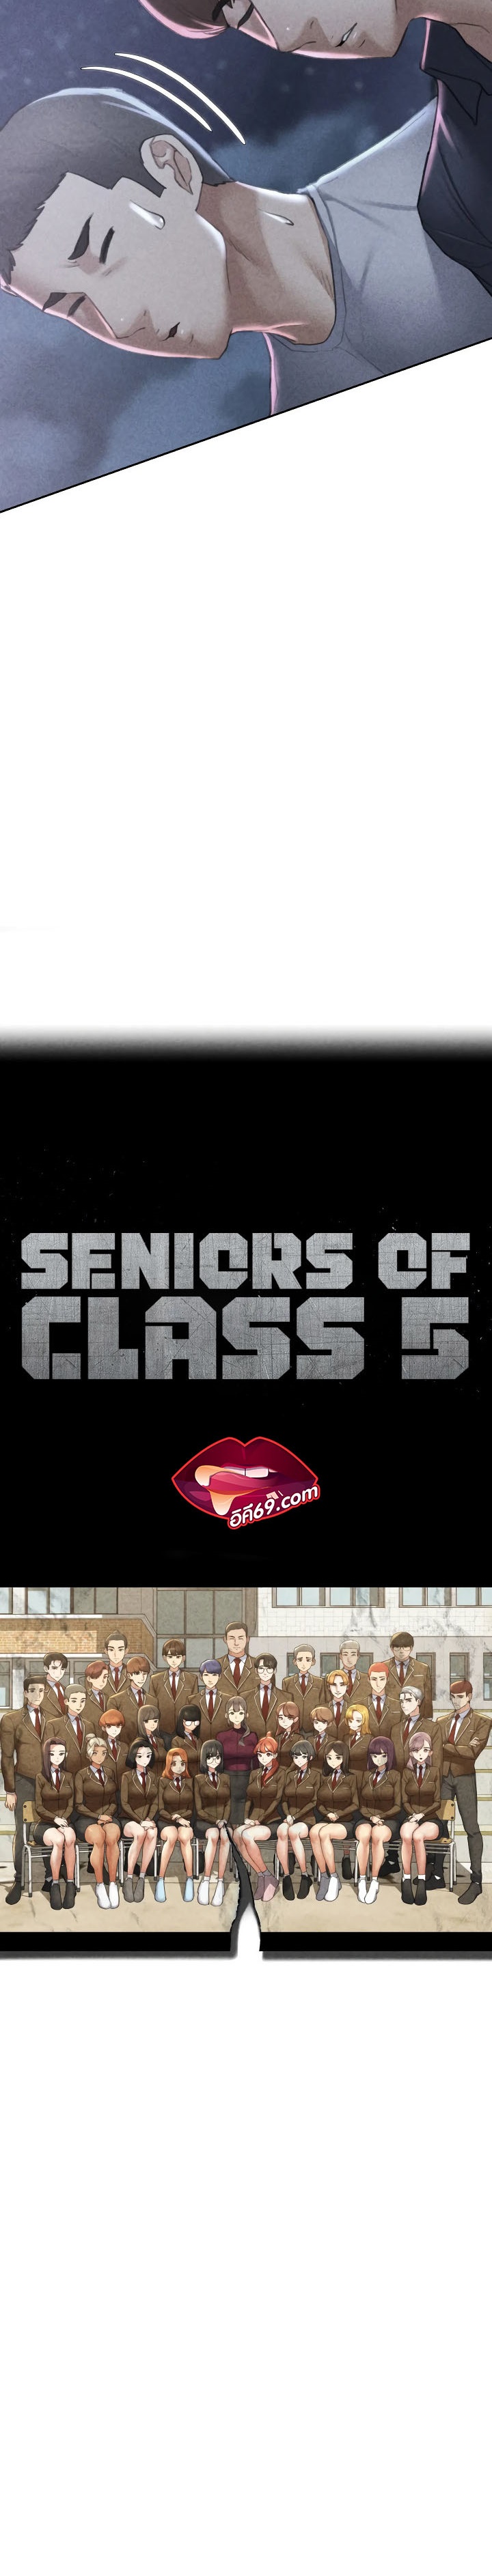 Seniors of class 5 15 03